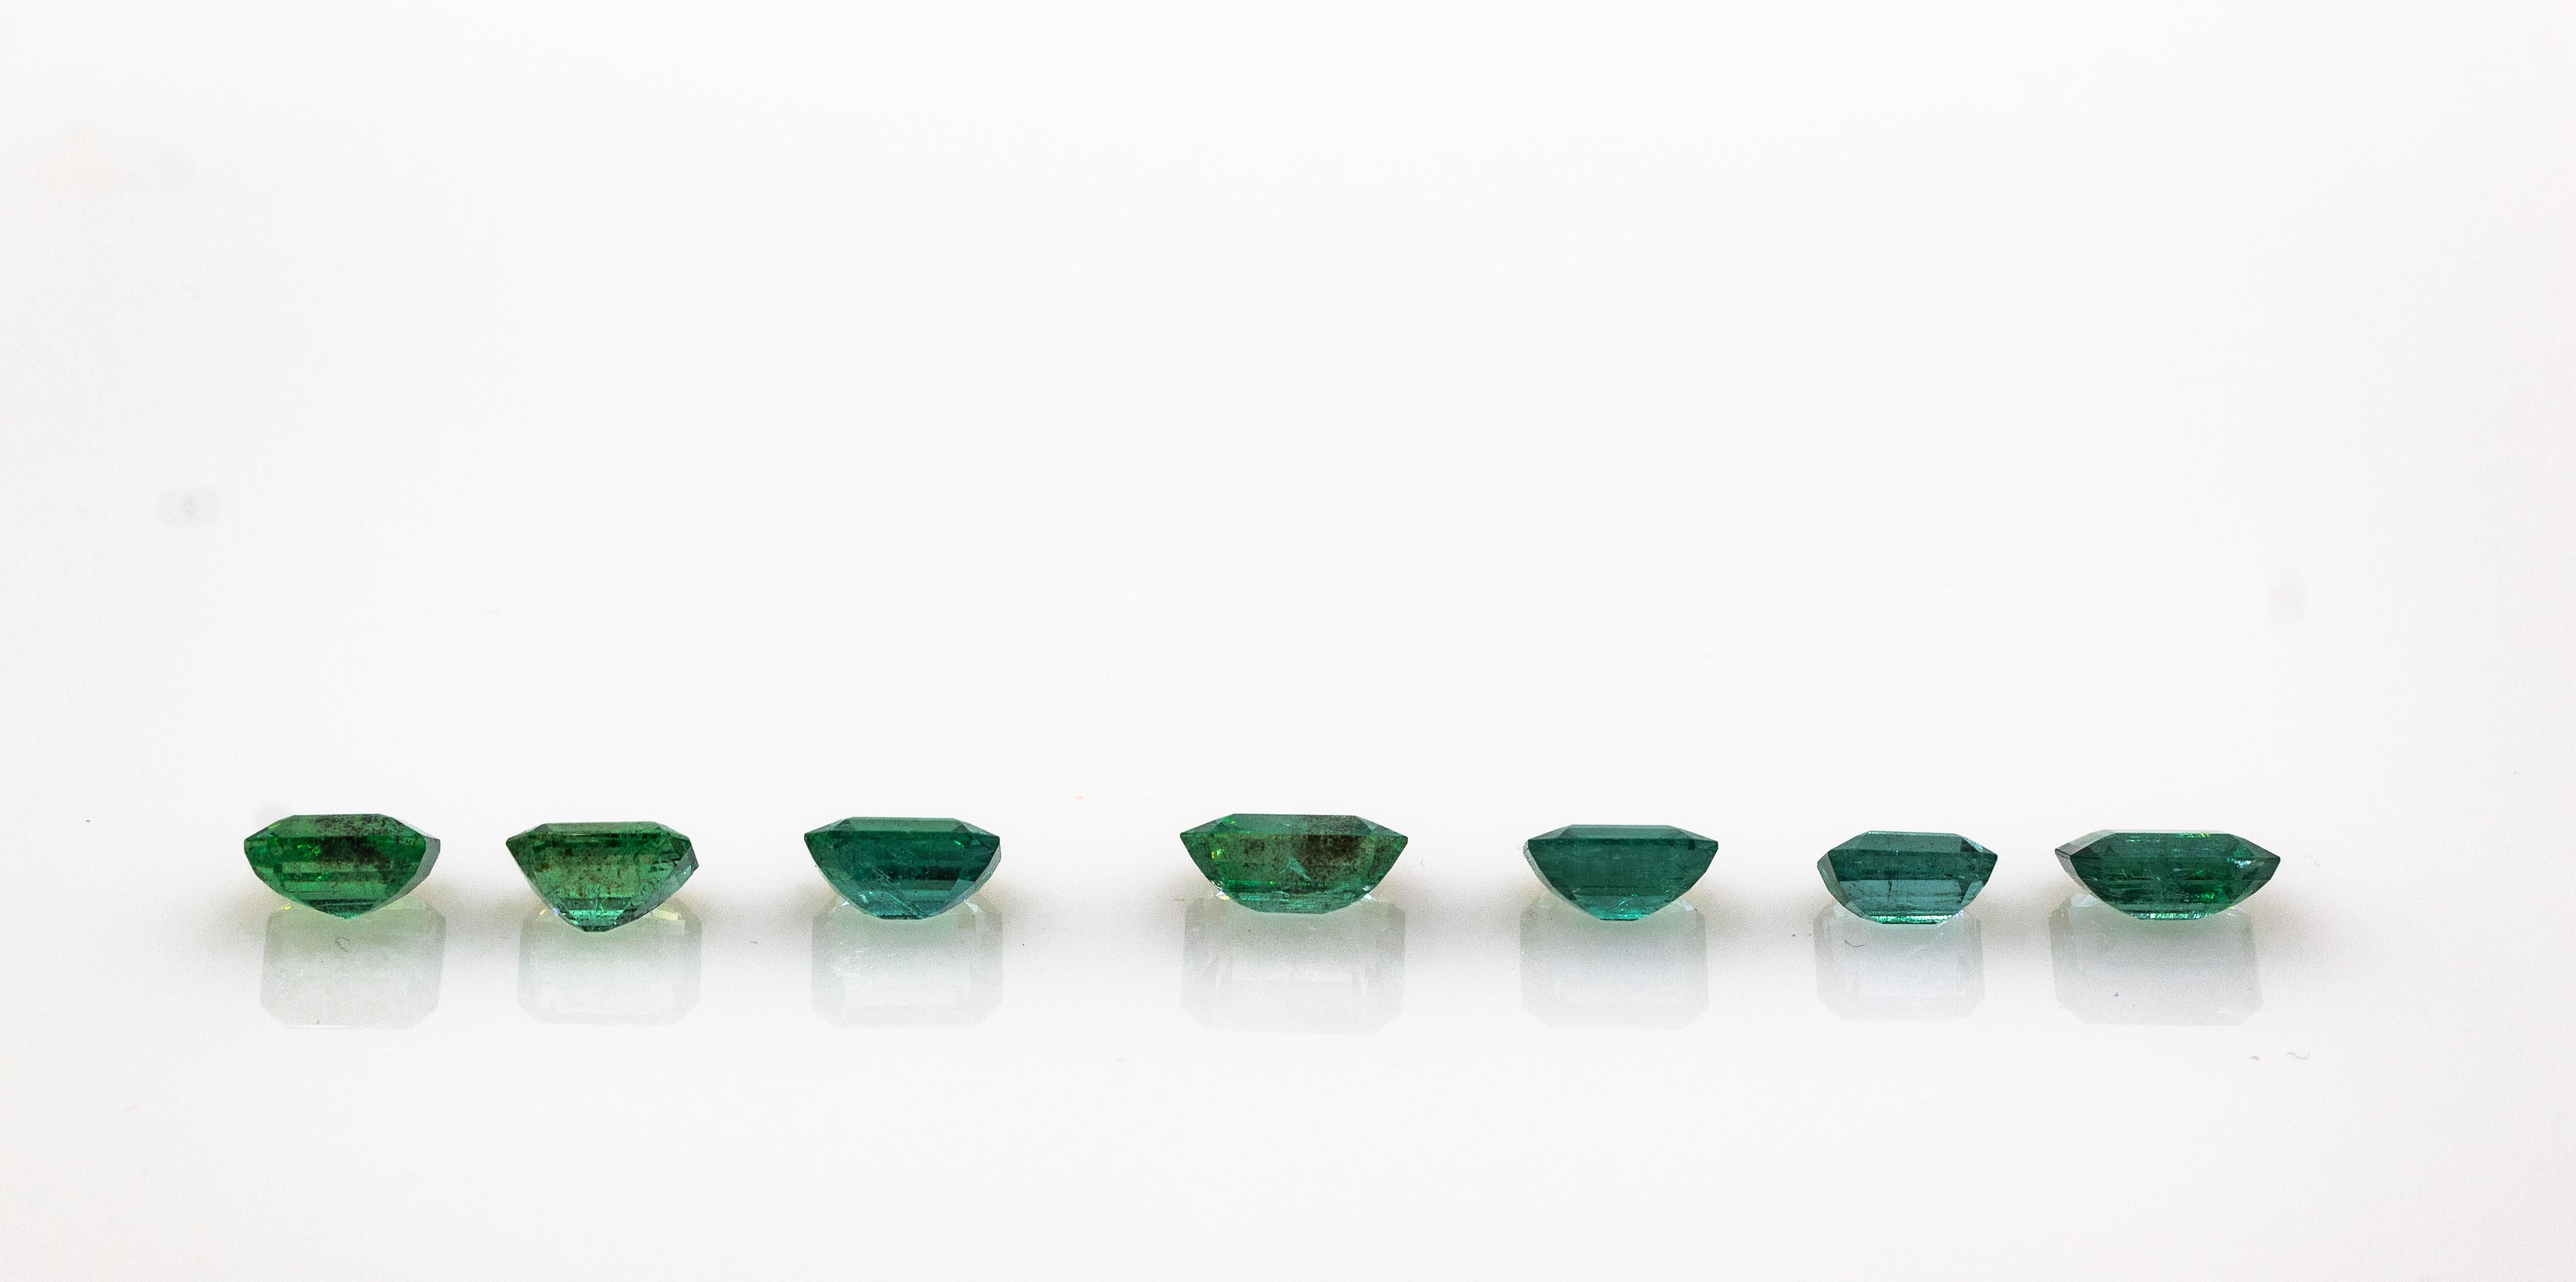 Certifiable Zambia Octagon Cut 4.18 Carat Emerald Loose Gemstone 6